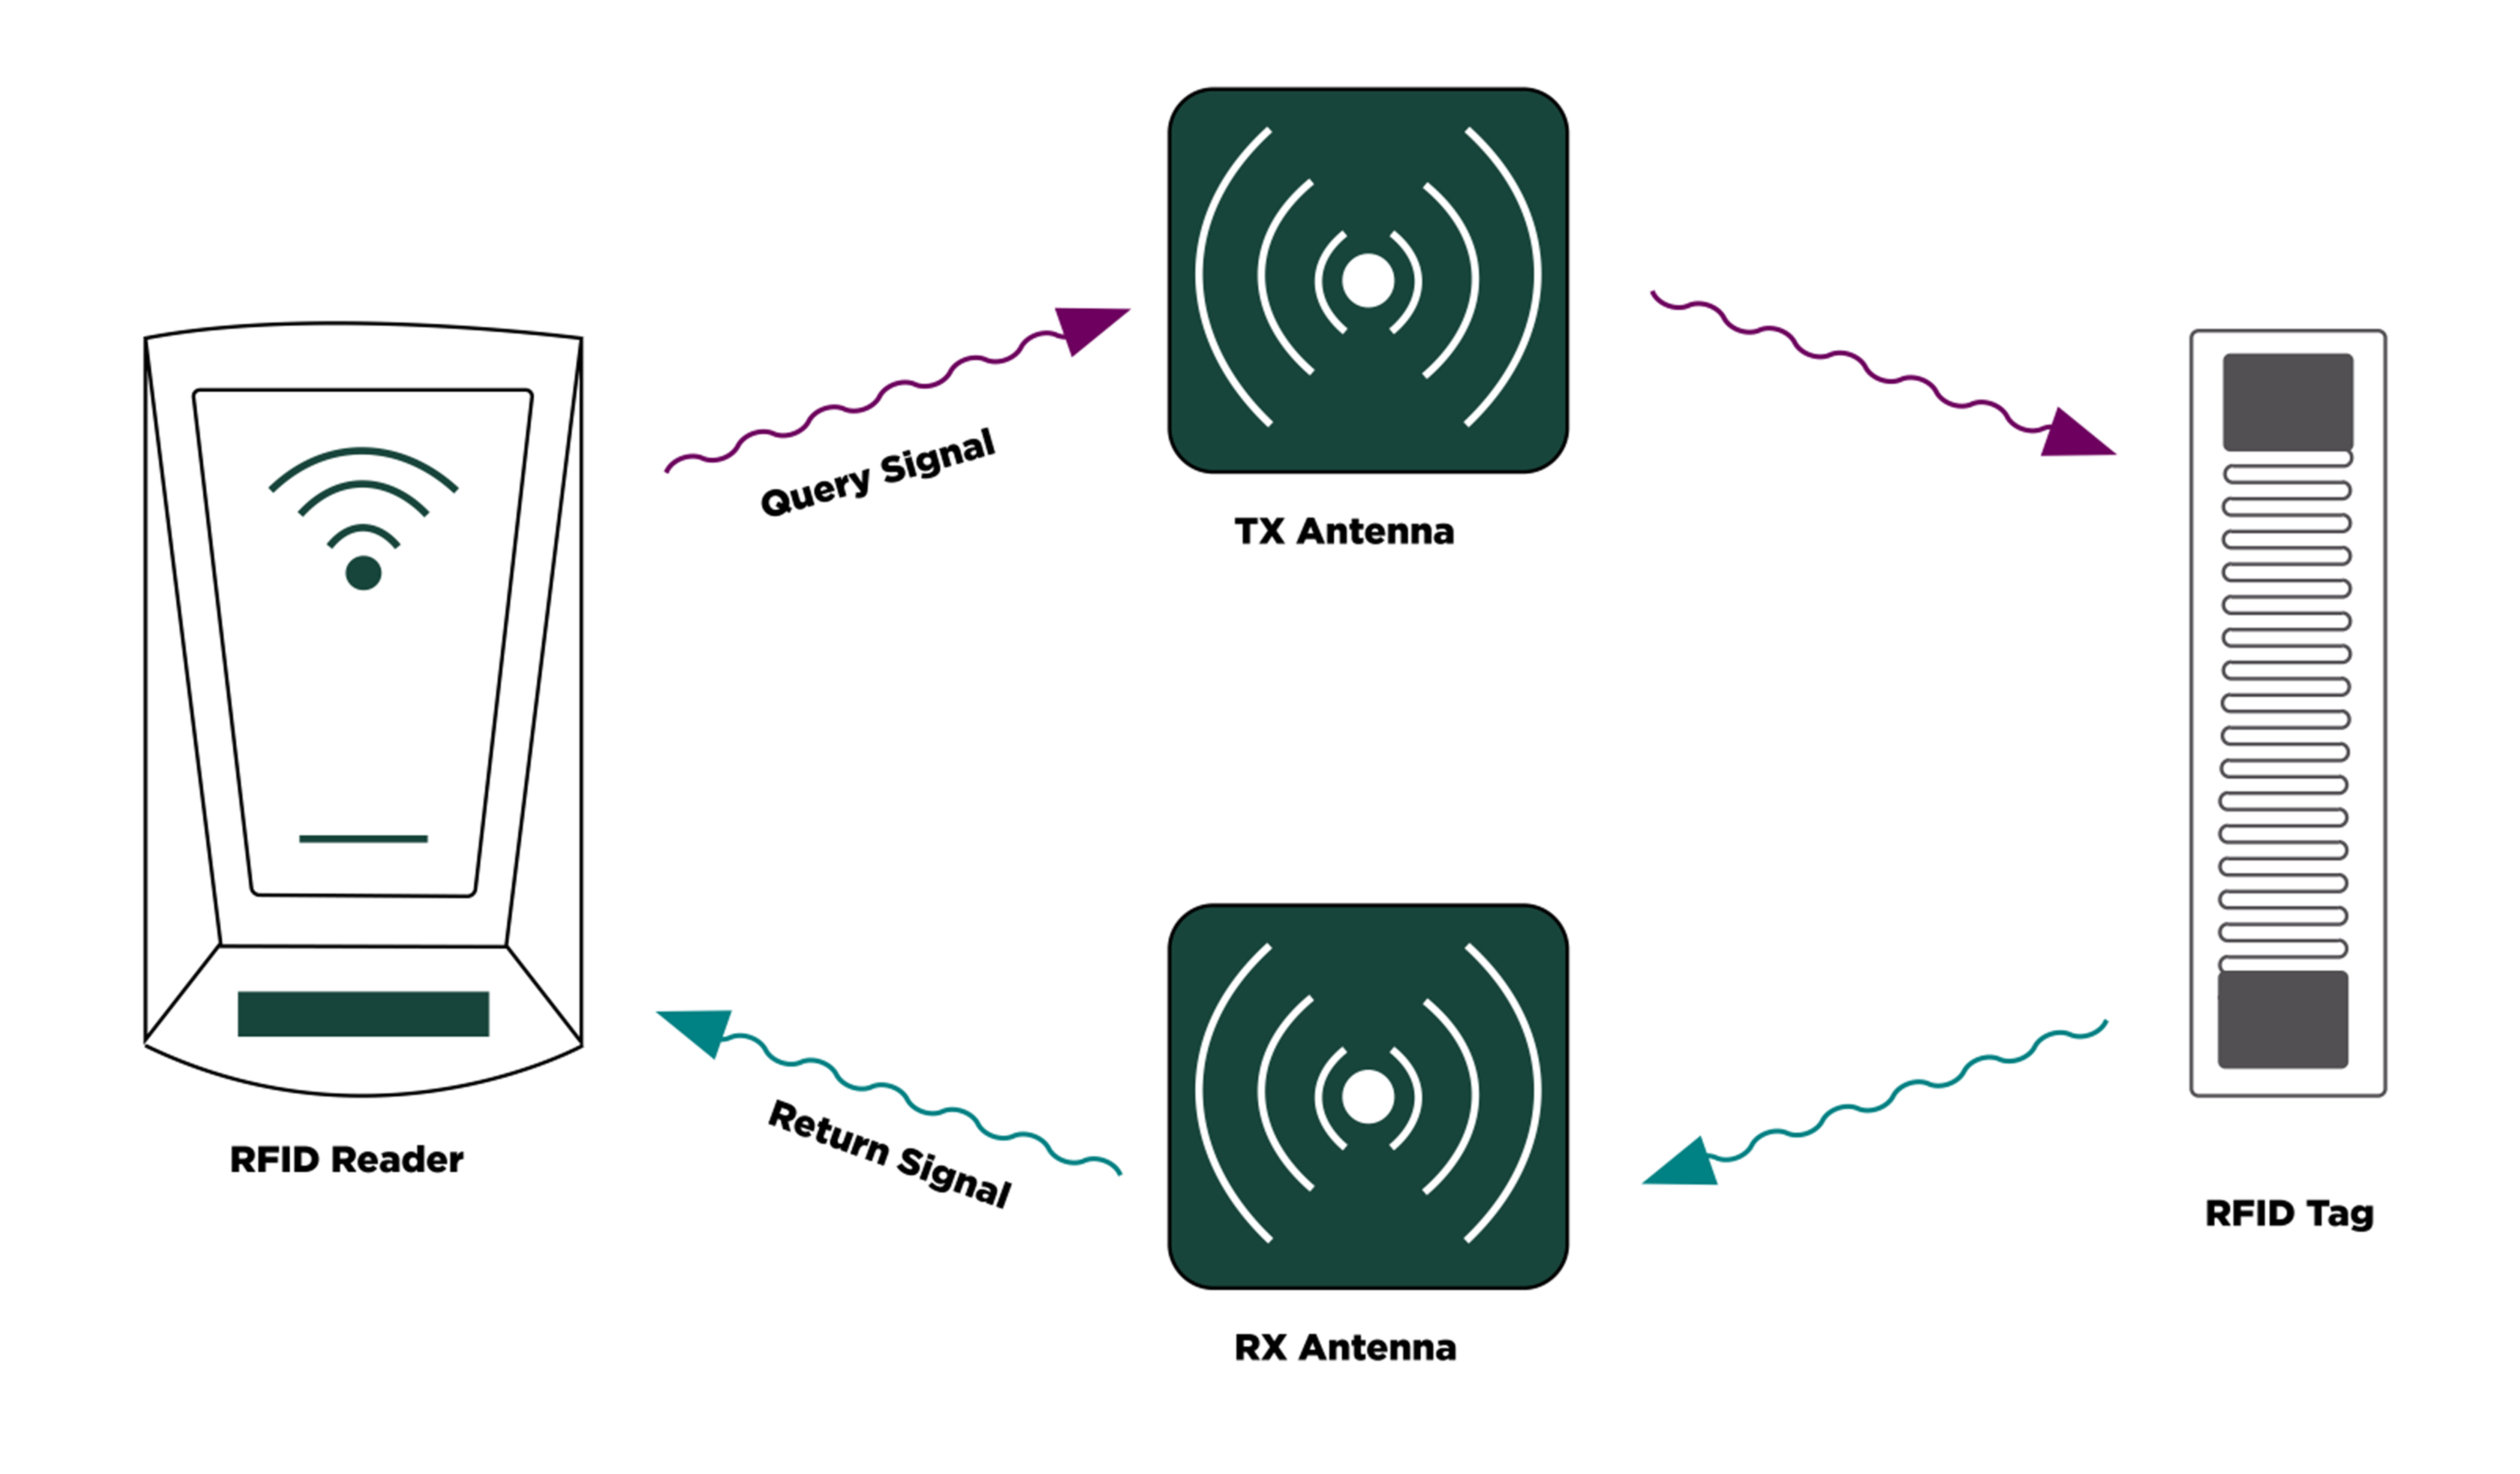 Chart describing different RFID tags: passive, active and semi-passive